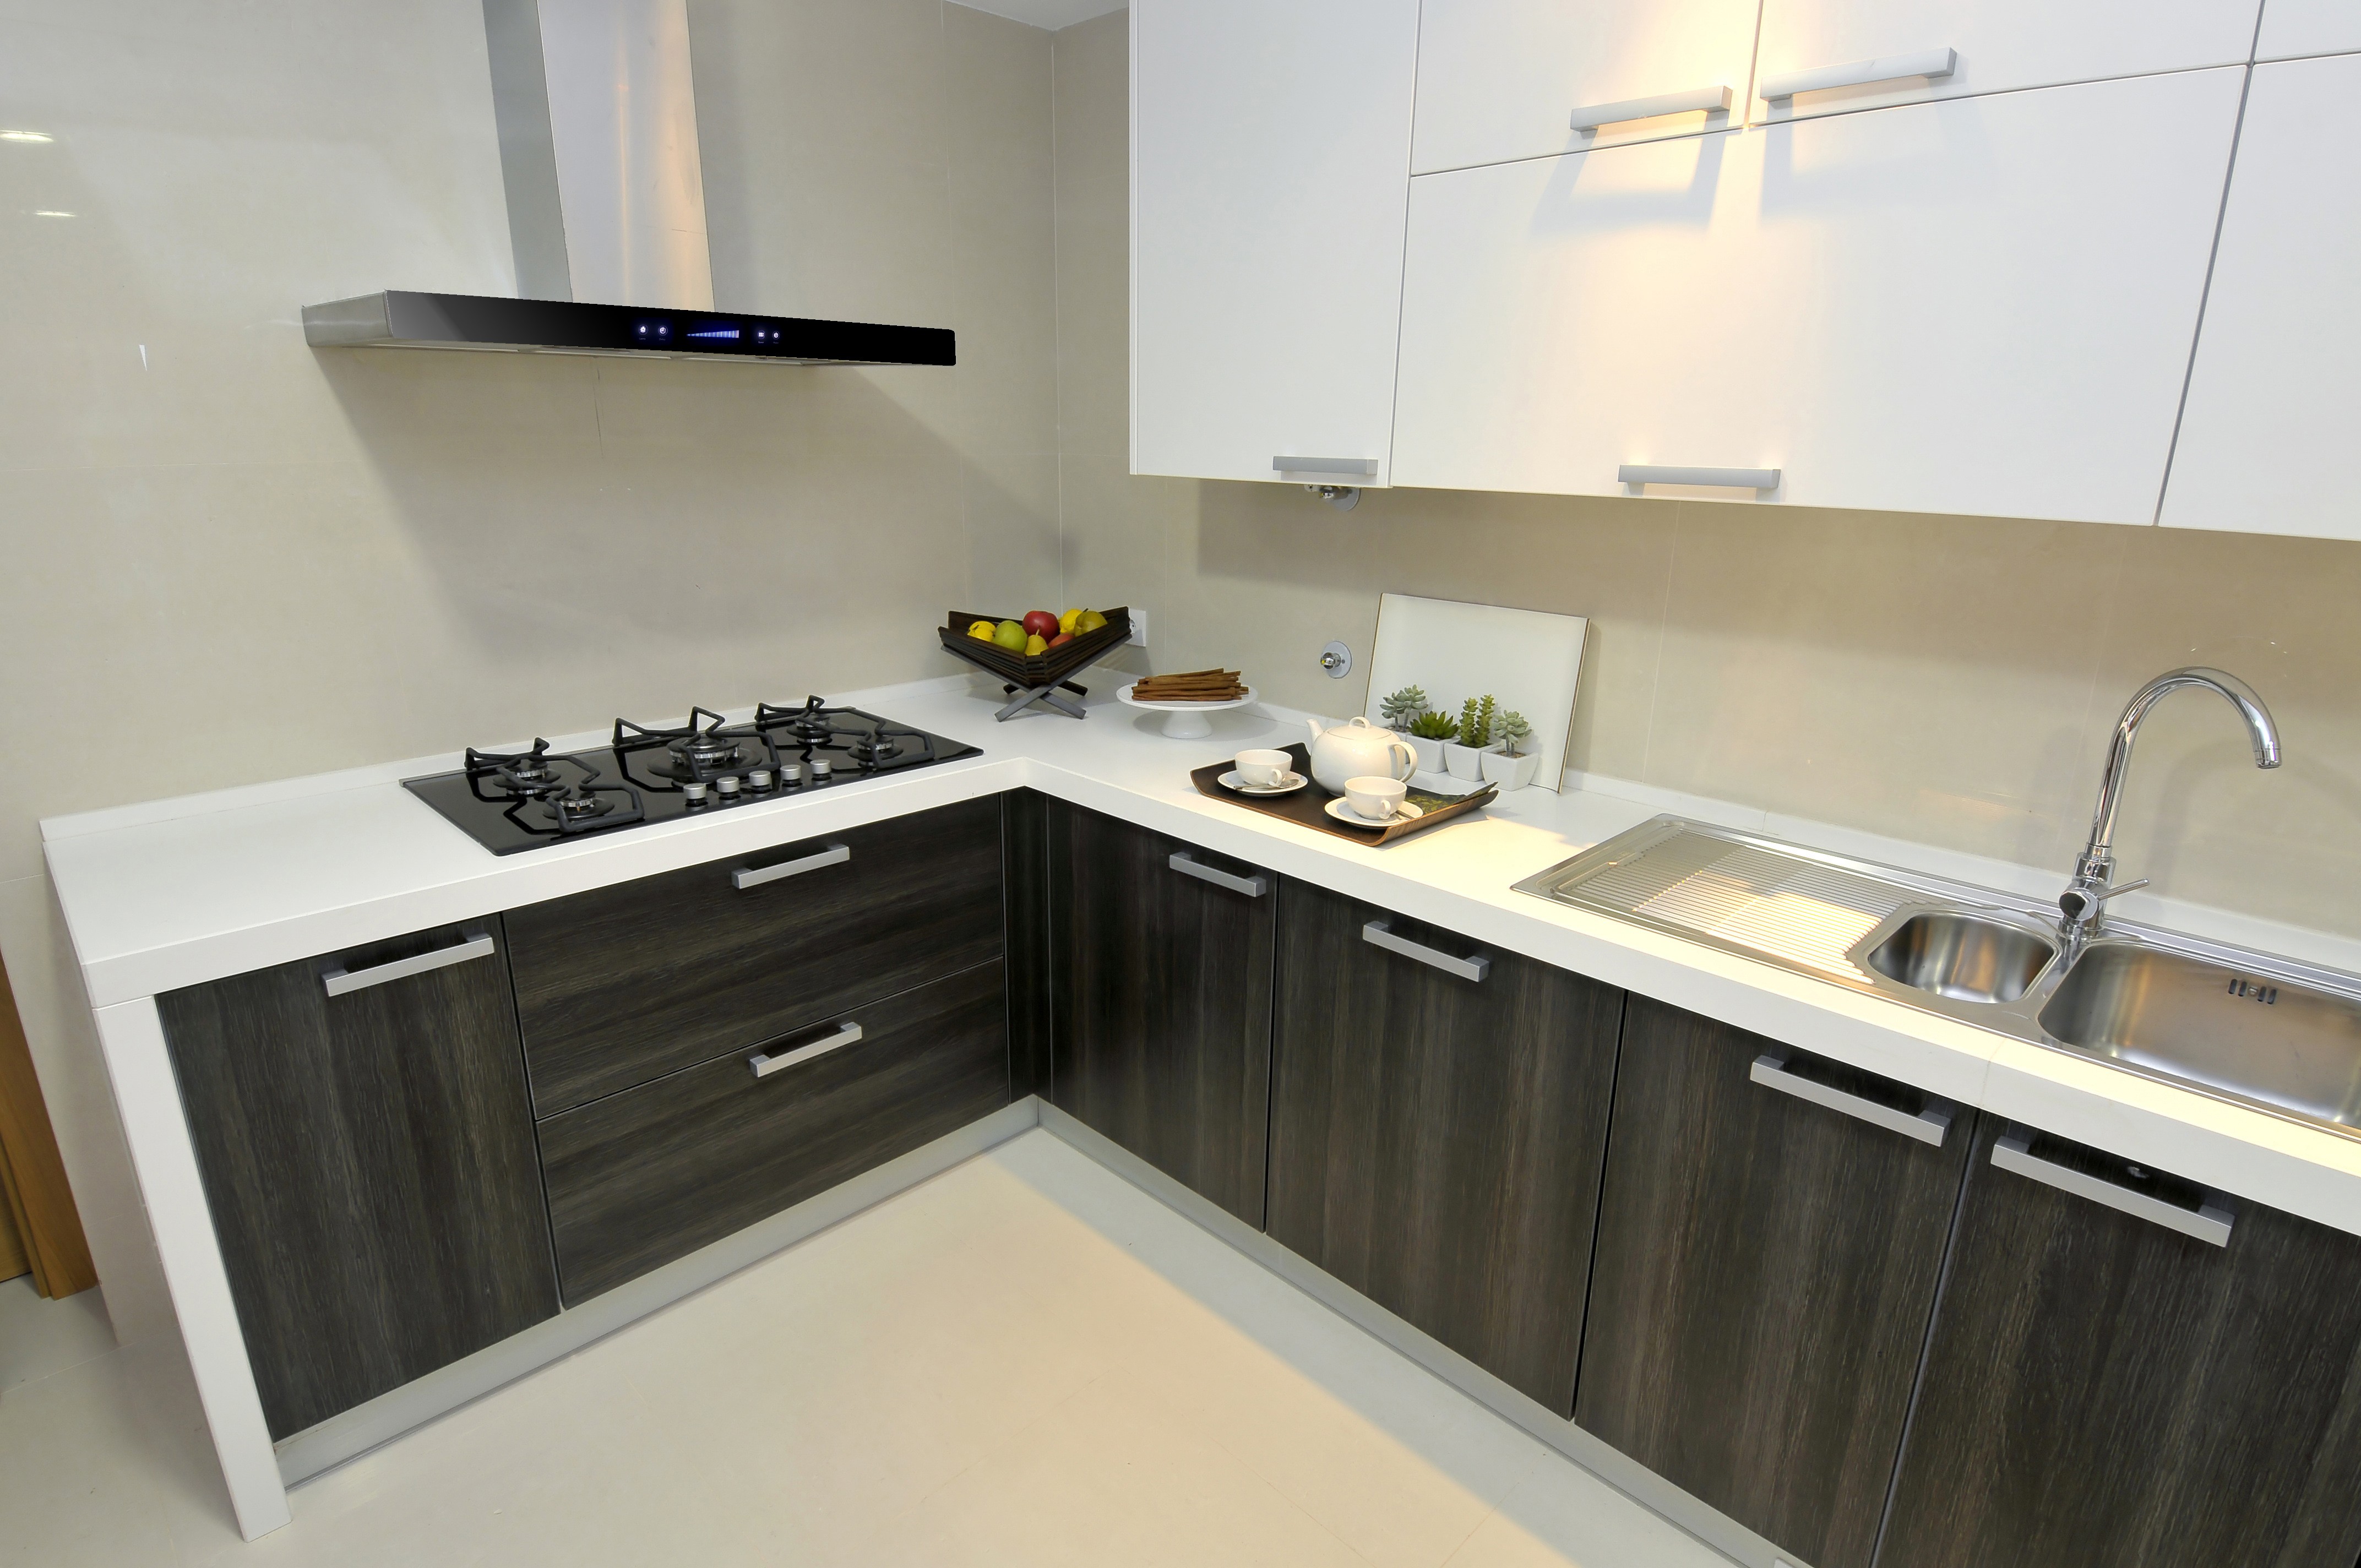 rta-kitchen-cabinets-melamine-and-laminate-kitchen-cabinets